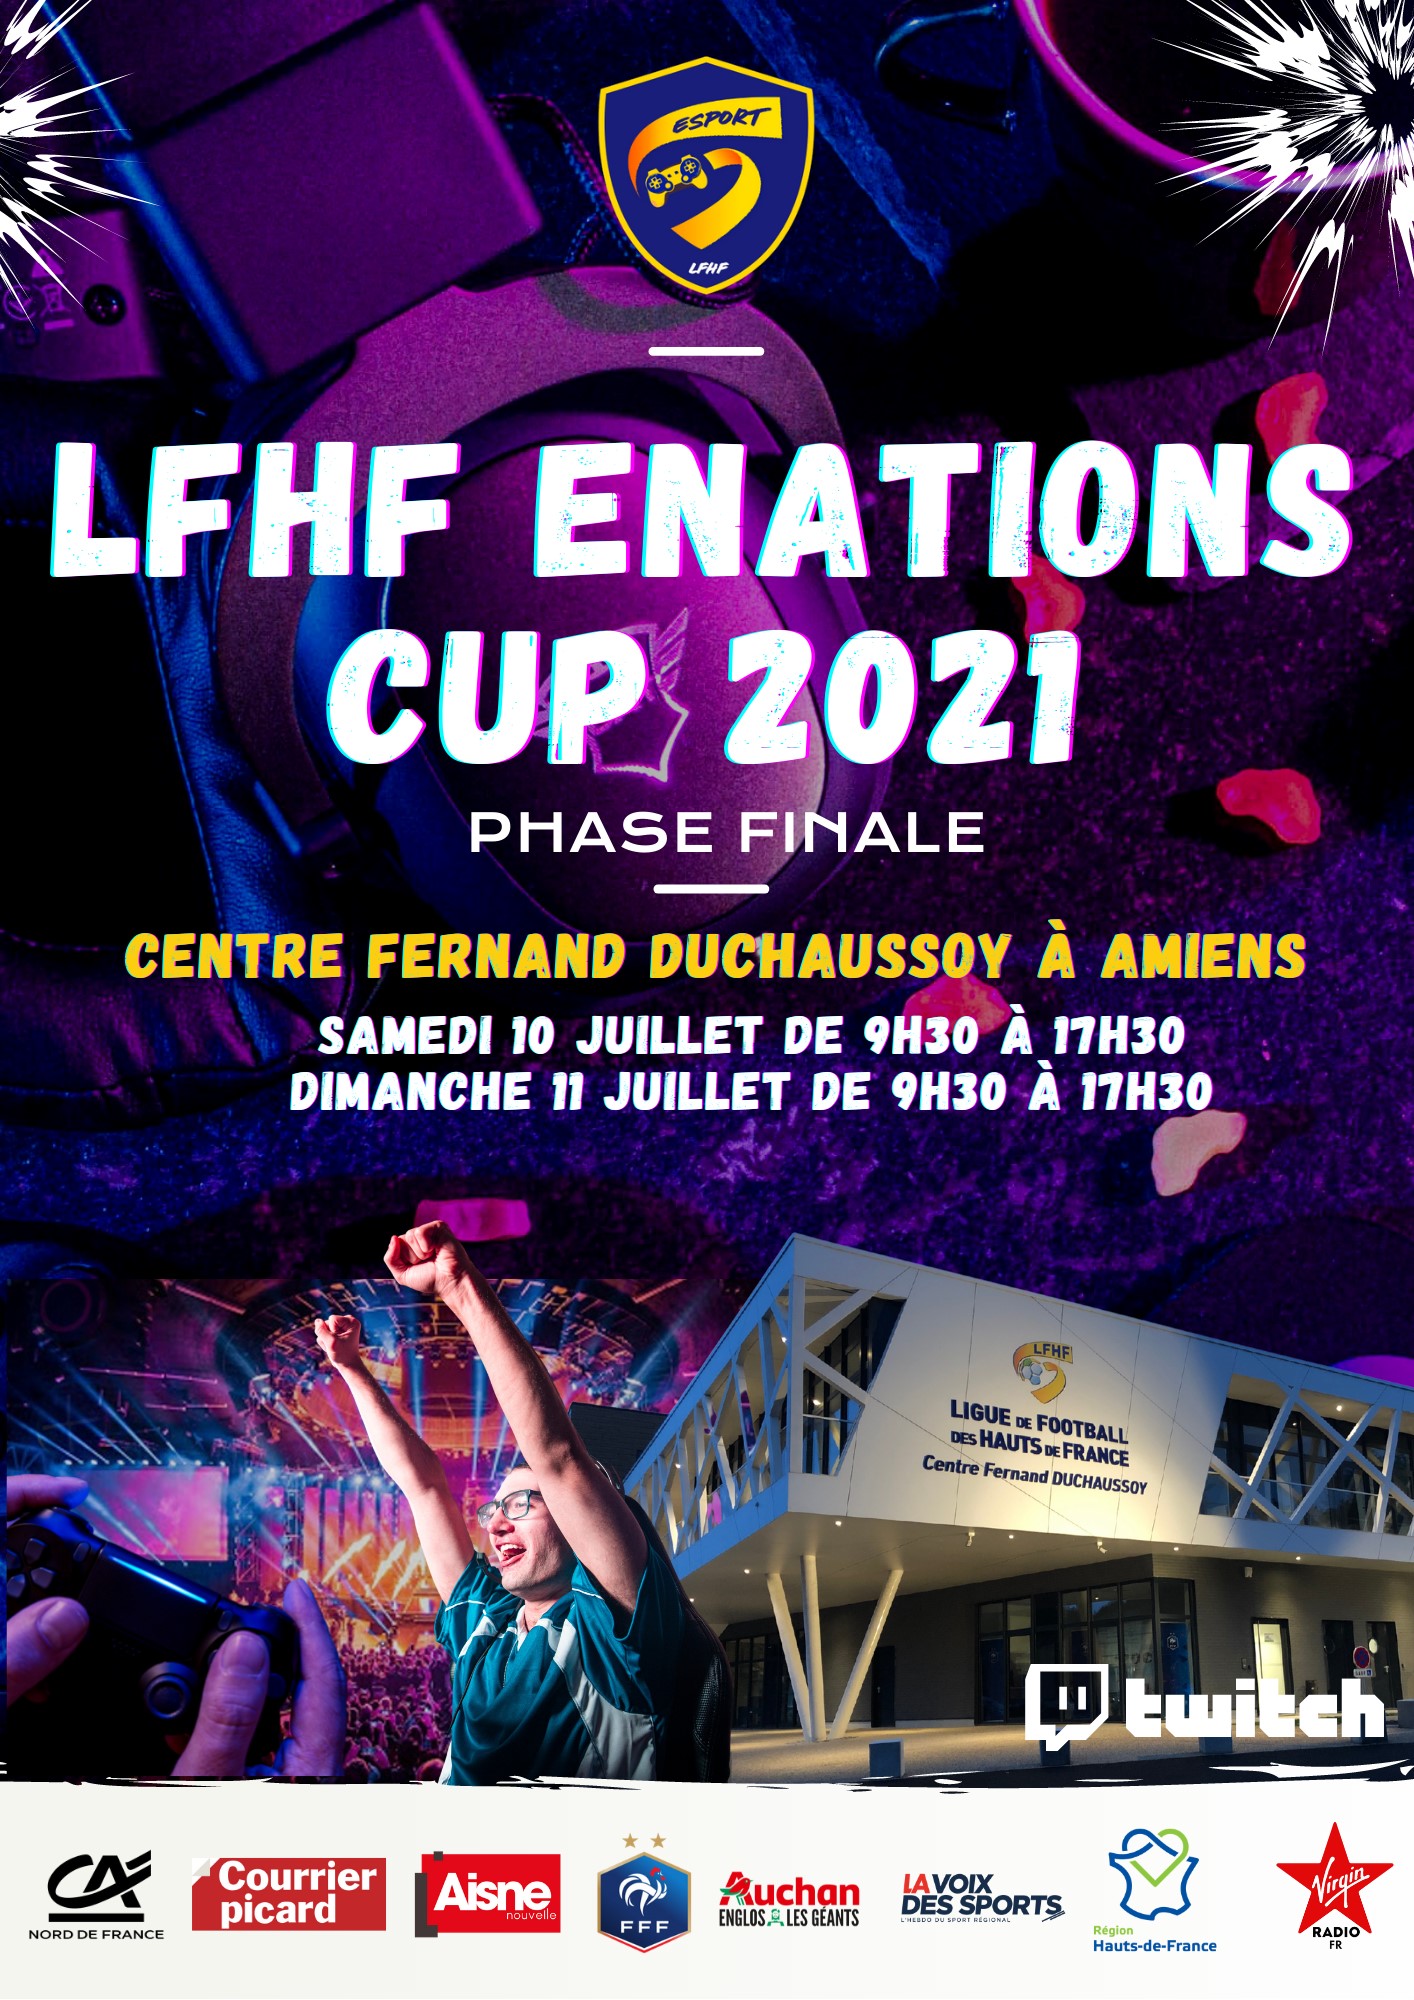 lfhf enations cup 2021